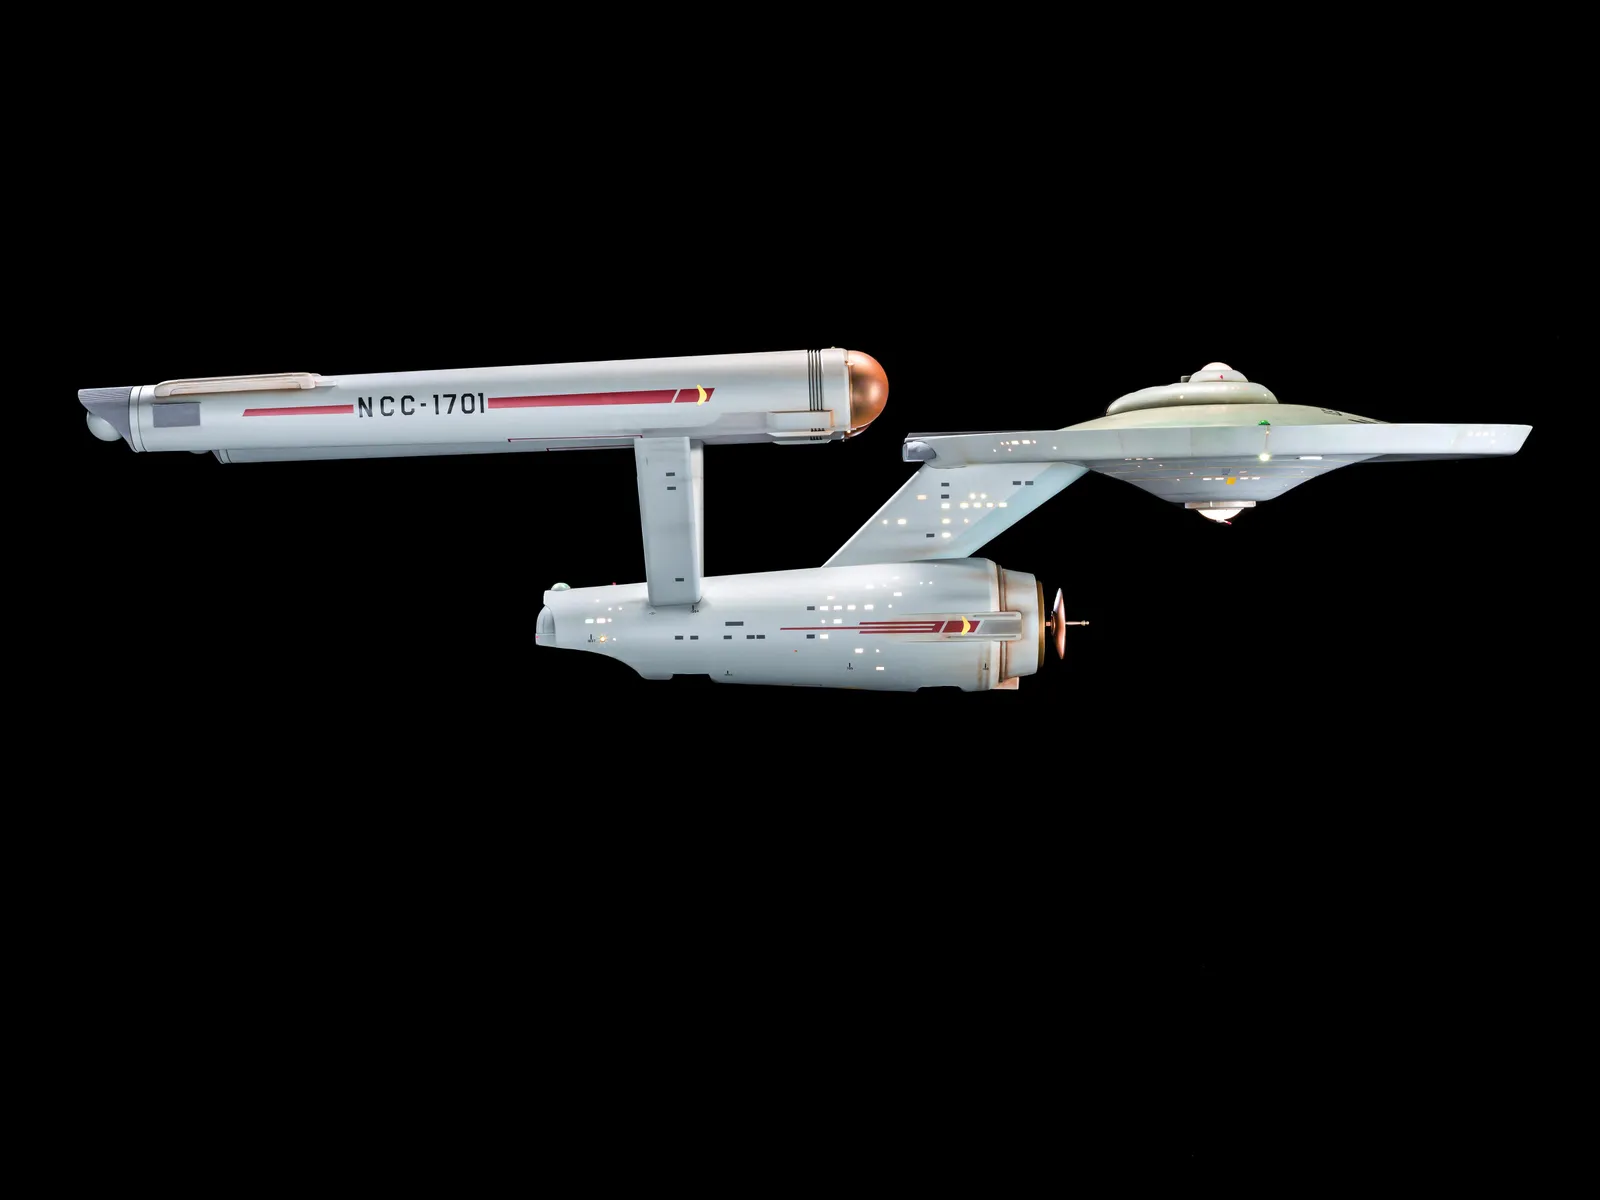 Why Star Trek: Enterprise Had the Best Pilot